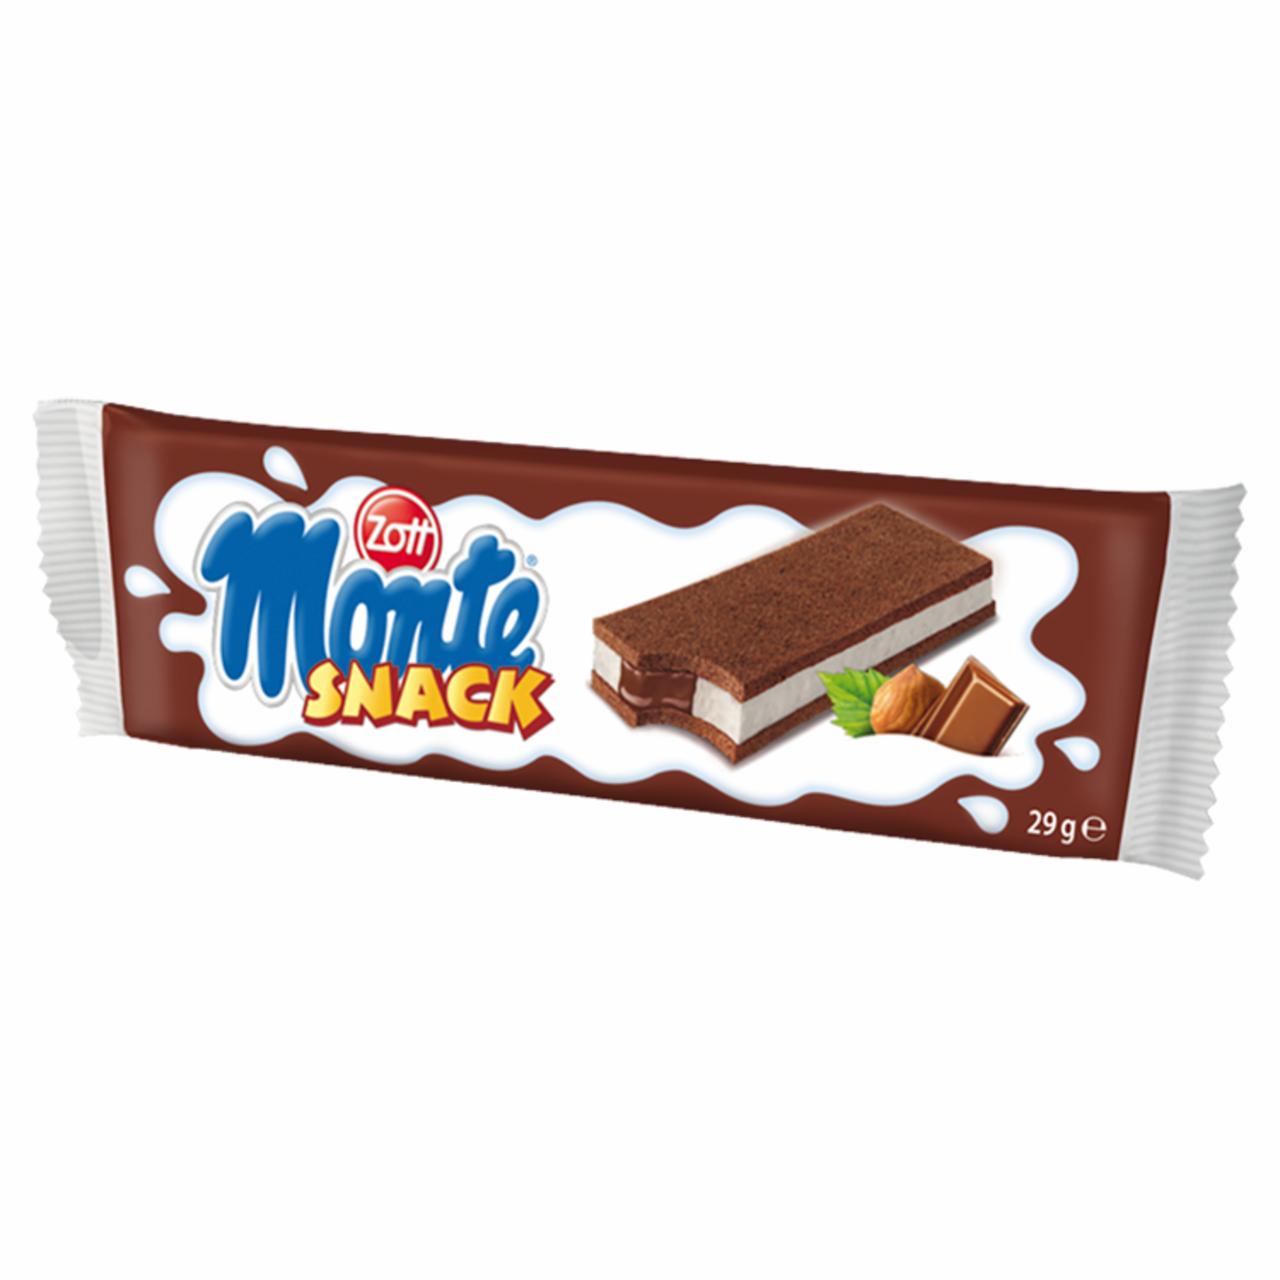 Zdjęcia - Ciastko z kremem Monte Snack 29 g Zott